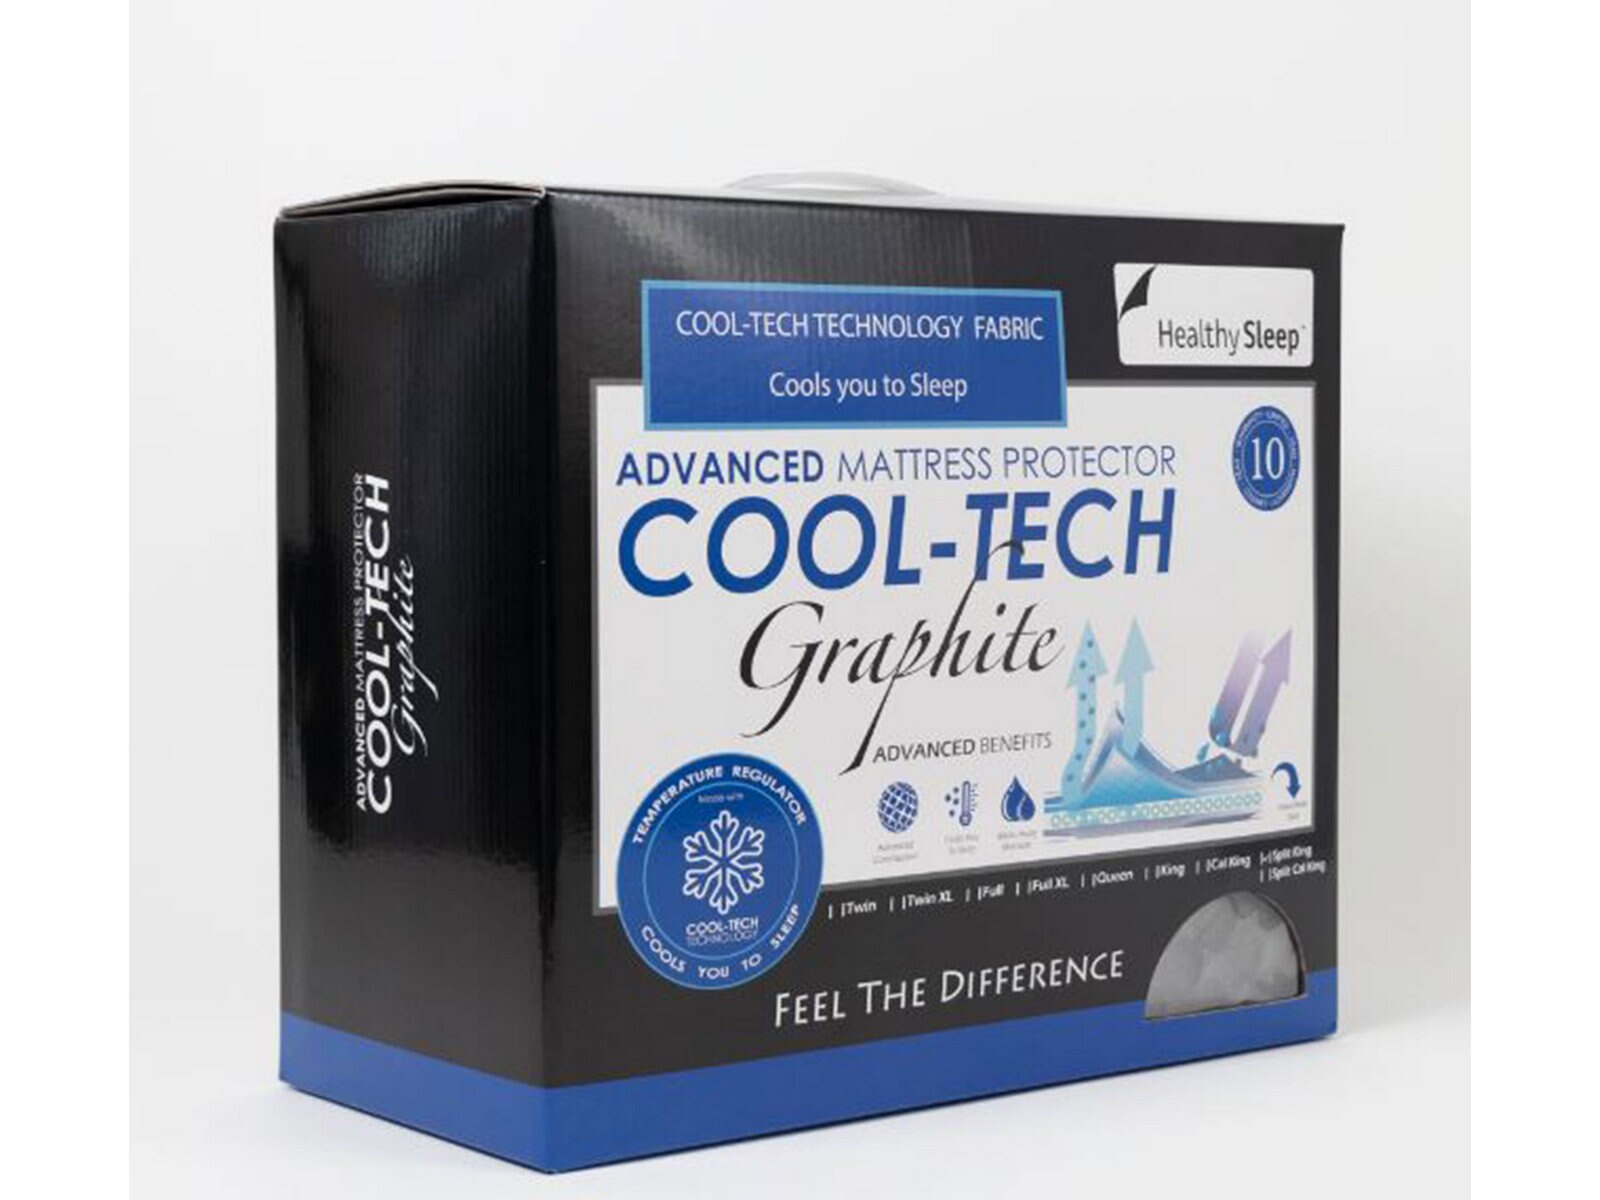 healthy sleep cool-tech graphite mattress protector